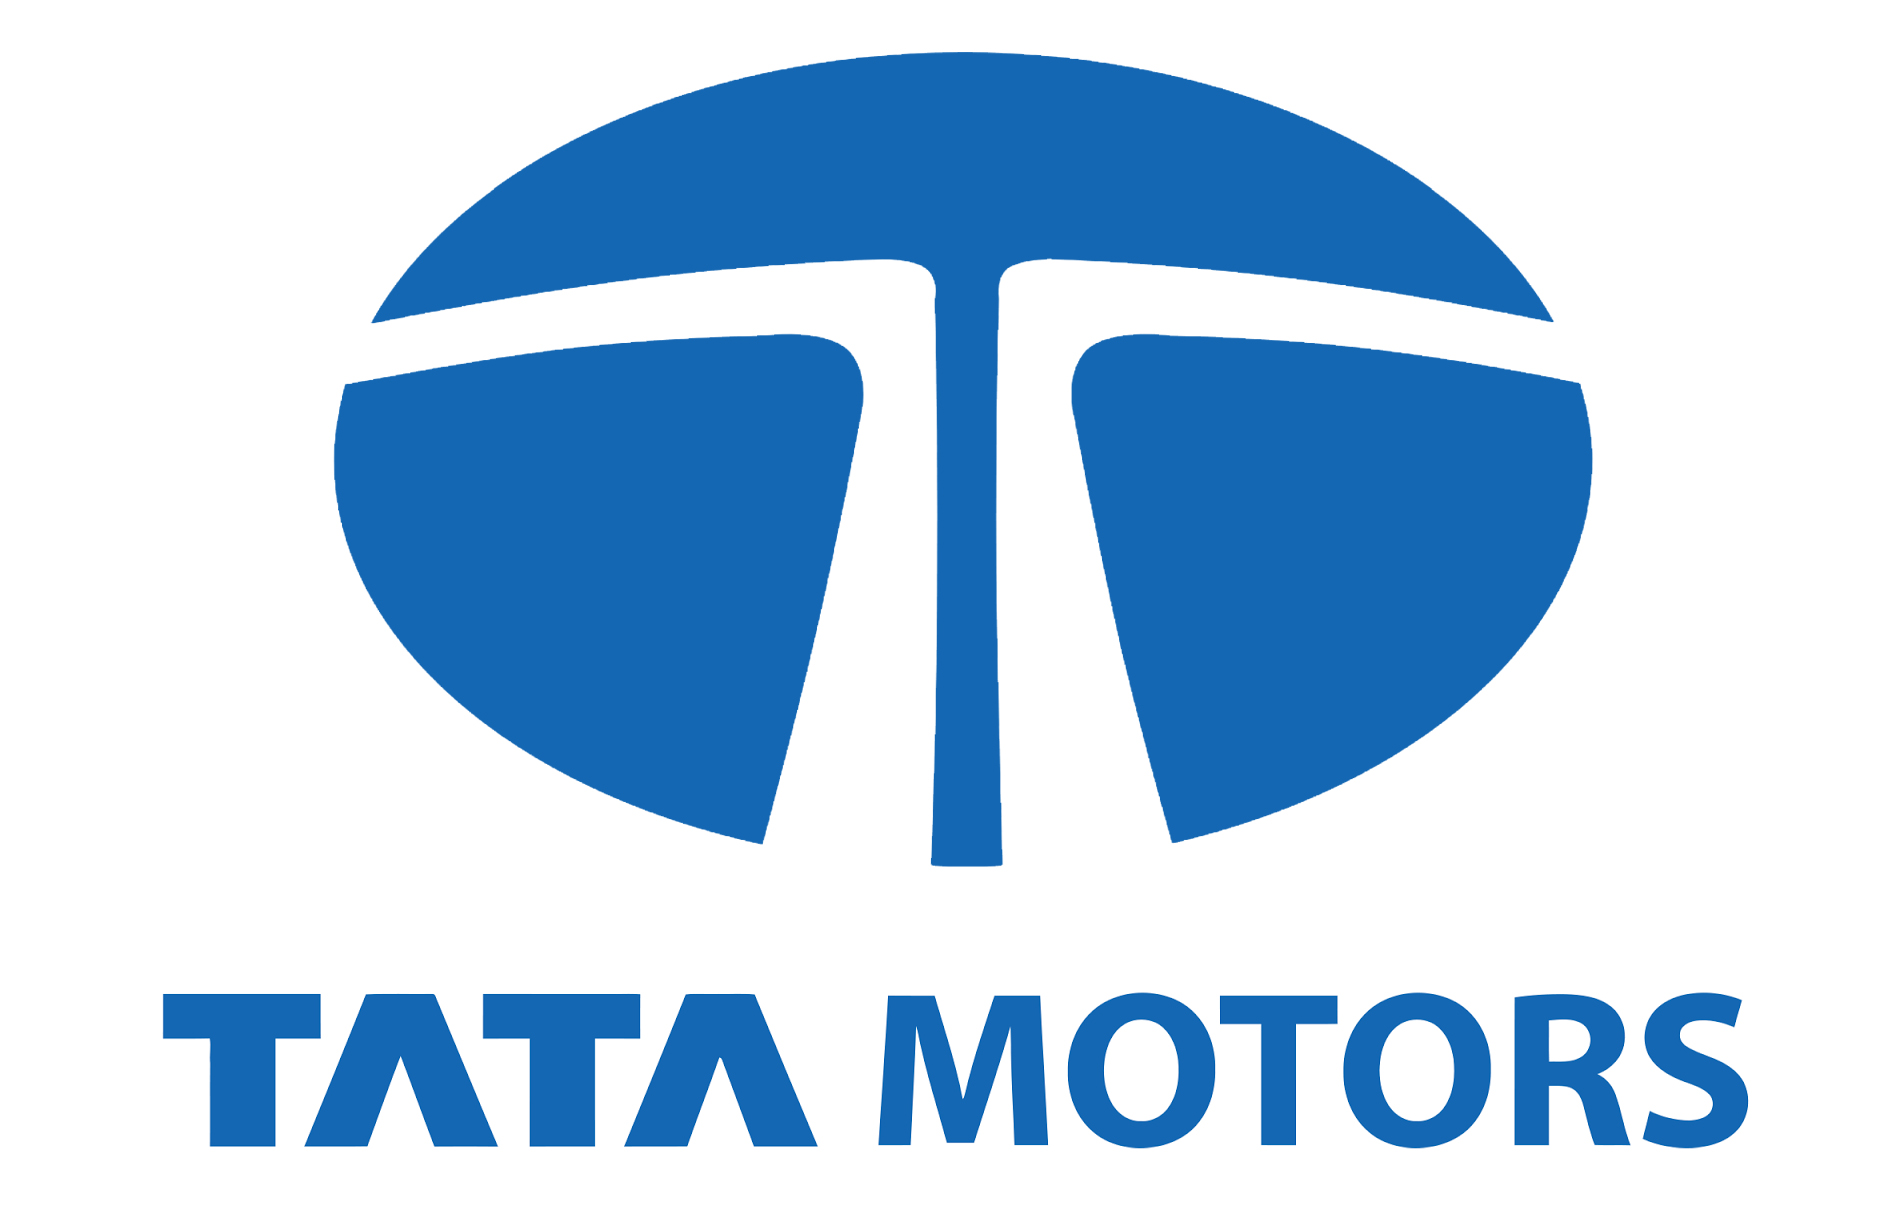 Tata Motors Cars Showroom - Truenorth Automobiles|Service Center|Automotive